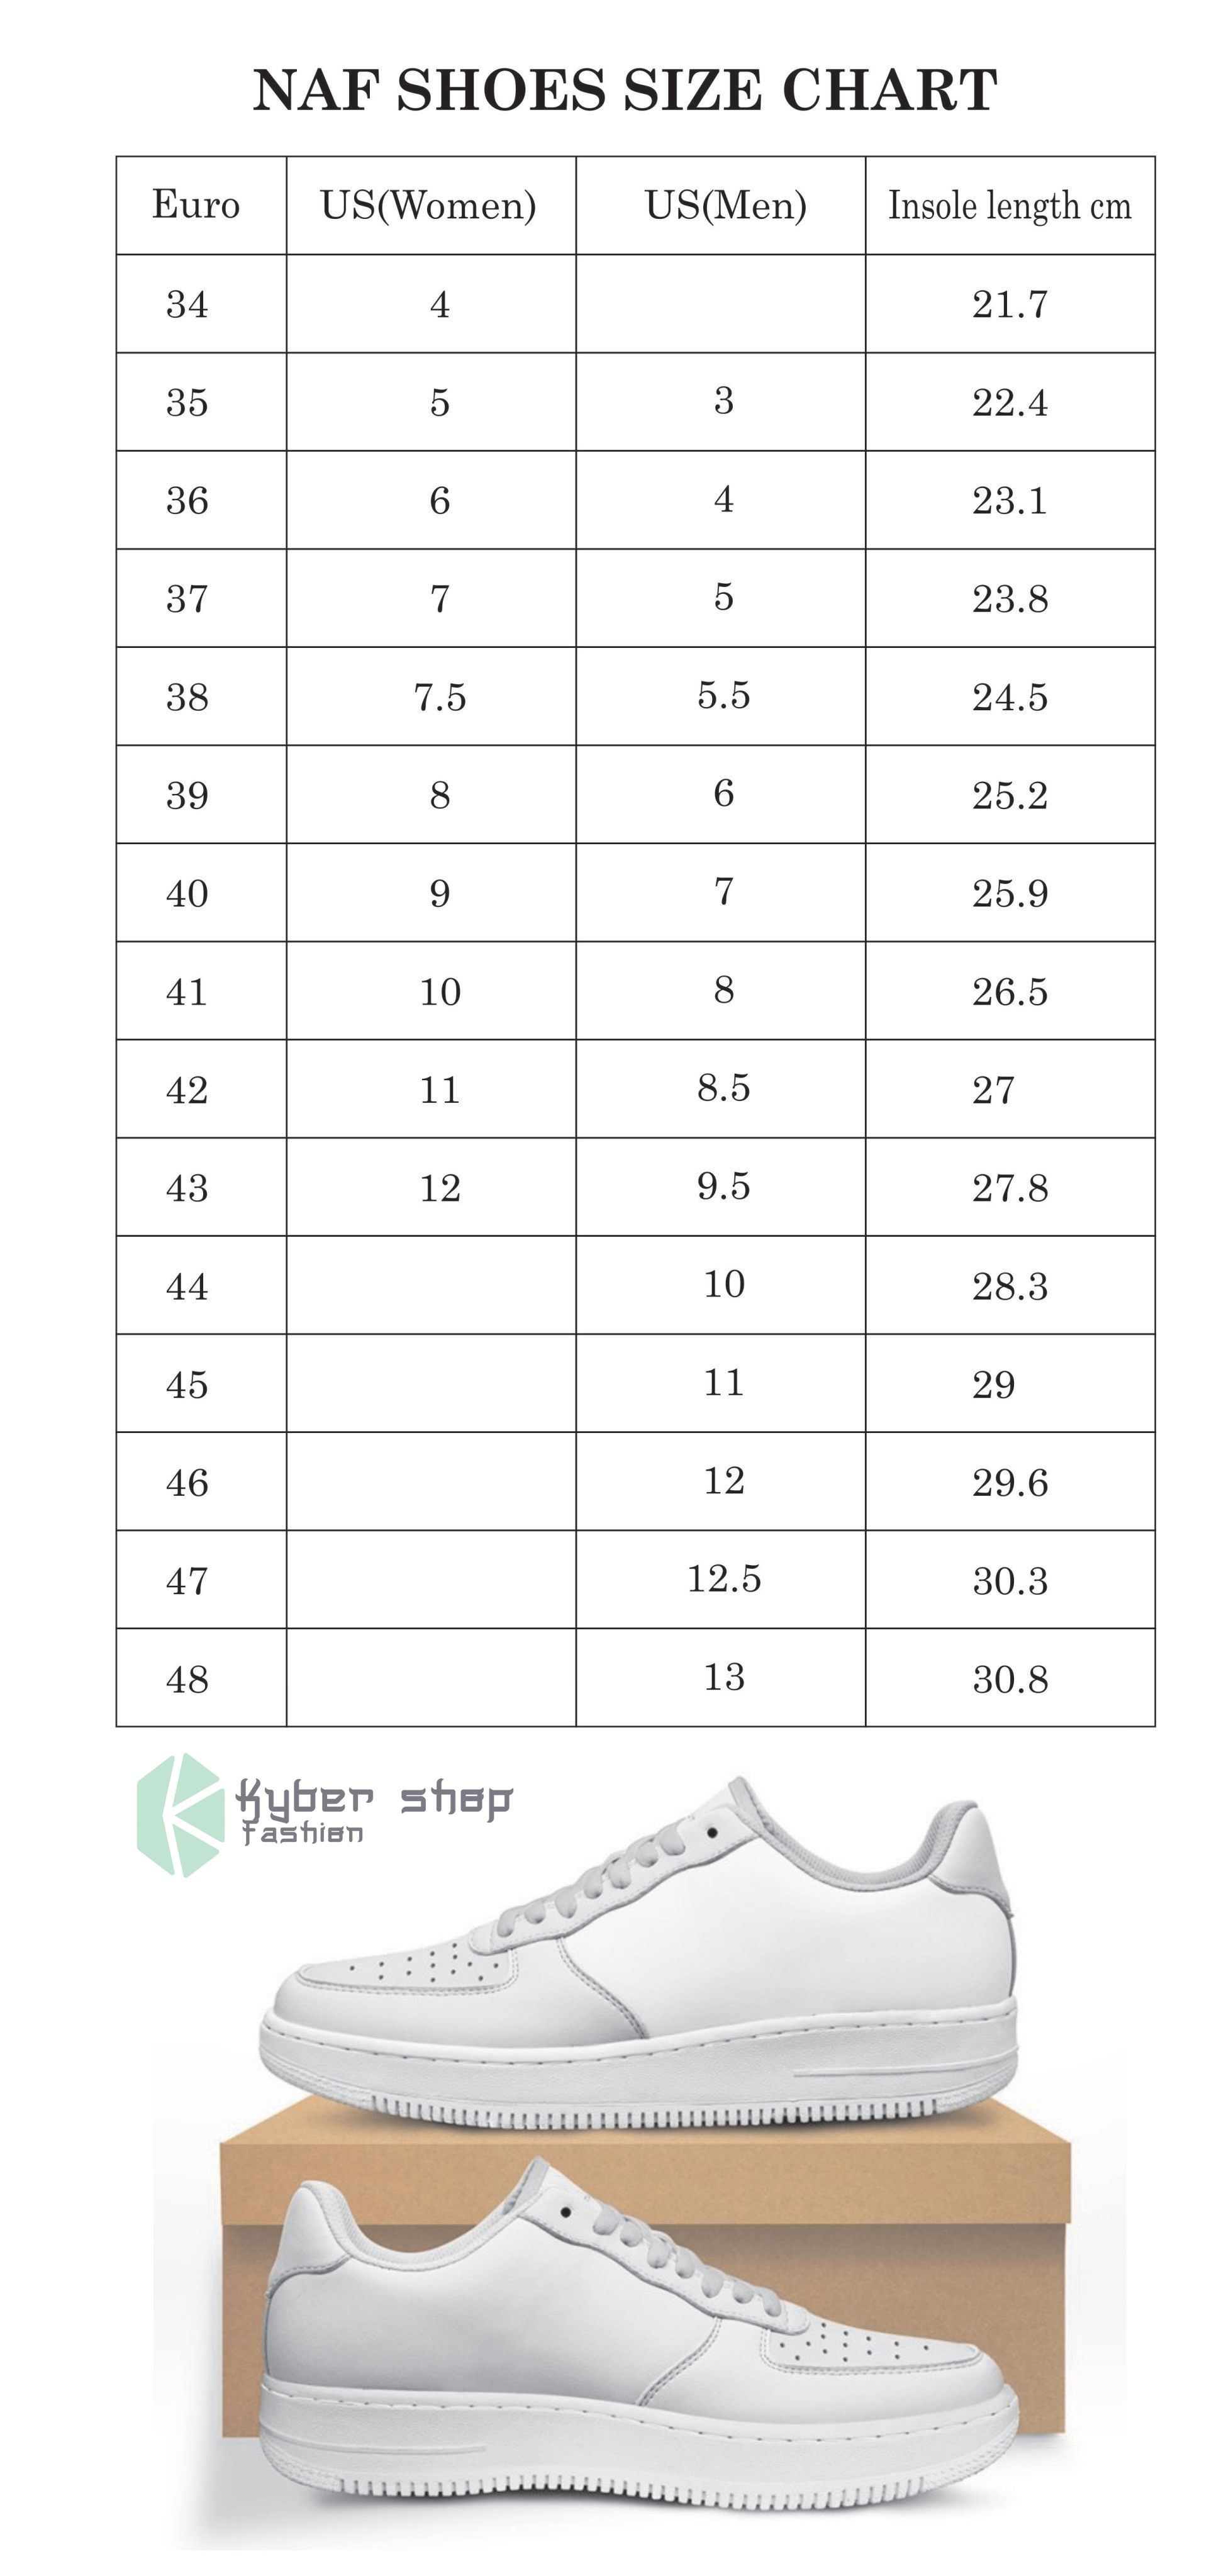 NAF Shoes Size Chart Kybershop